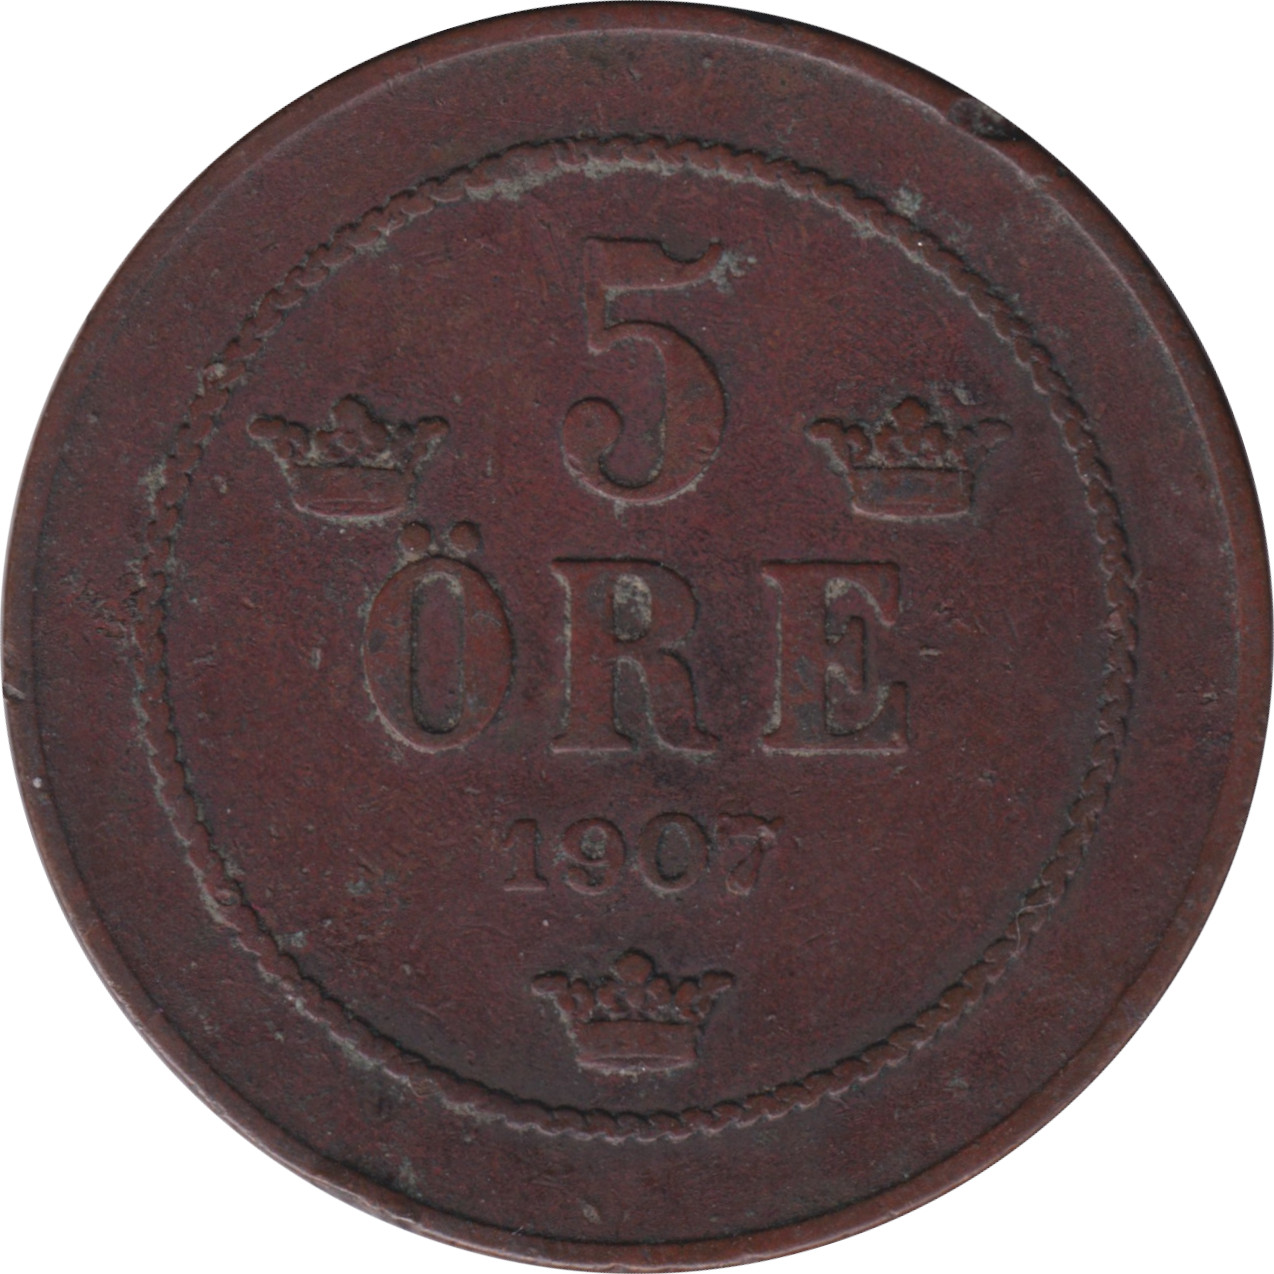 5 ore - Oscar II - Second monogramme